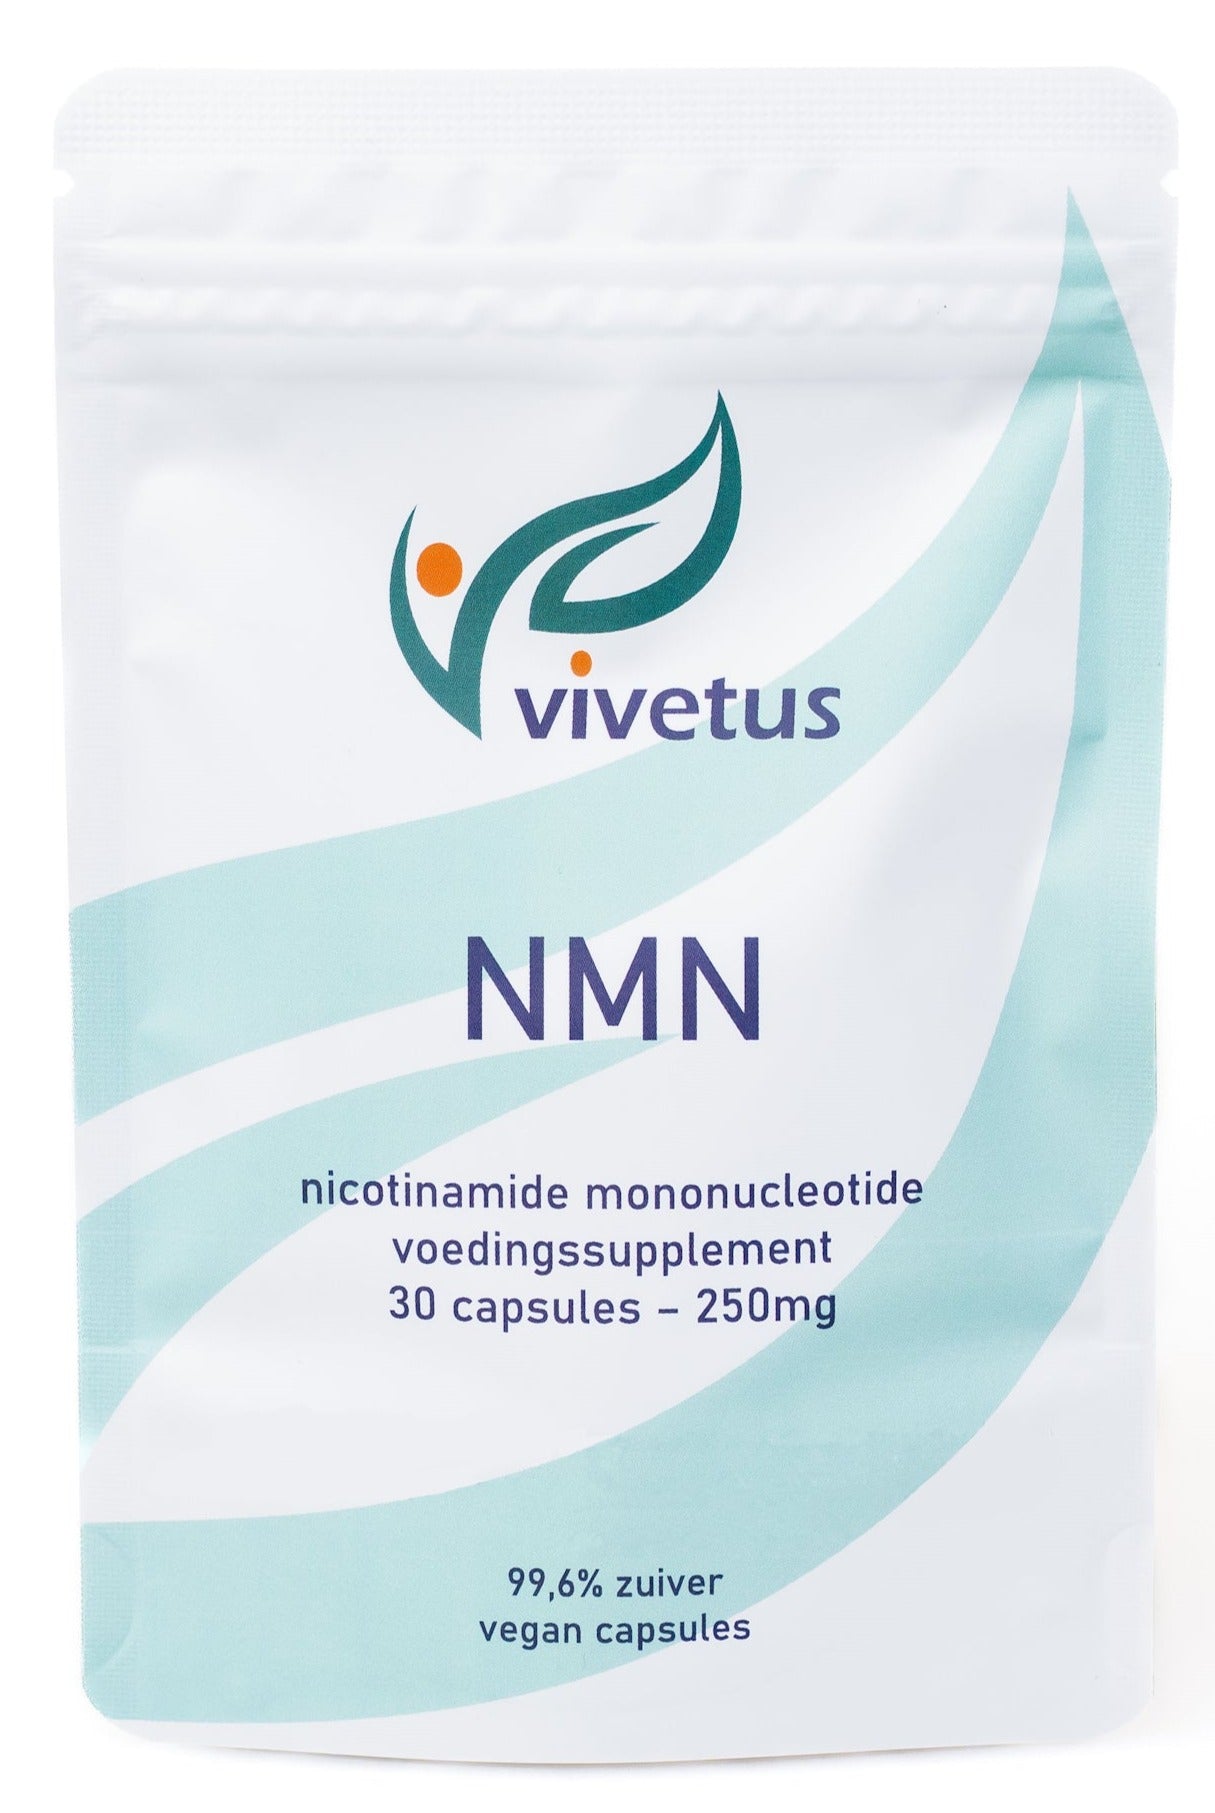 Vivetus® NMN capsules